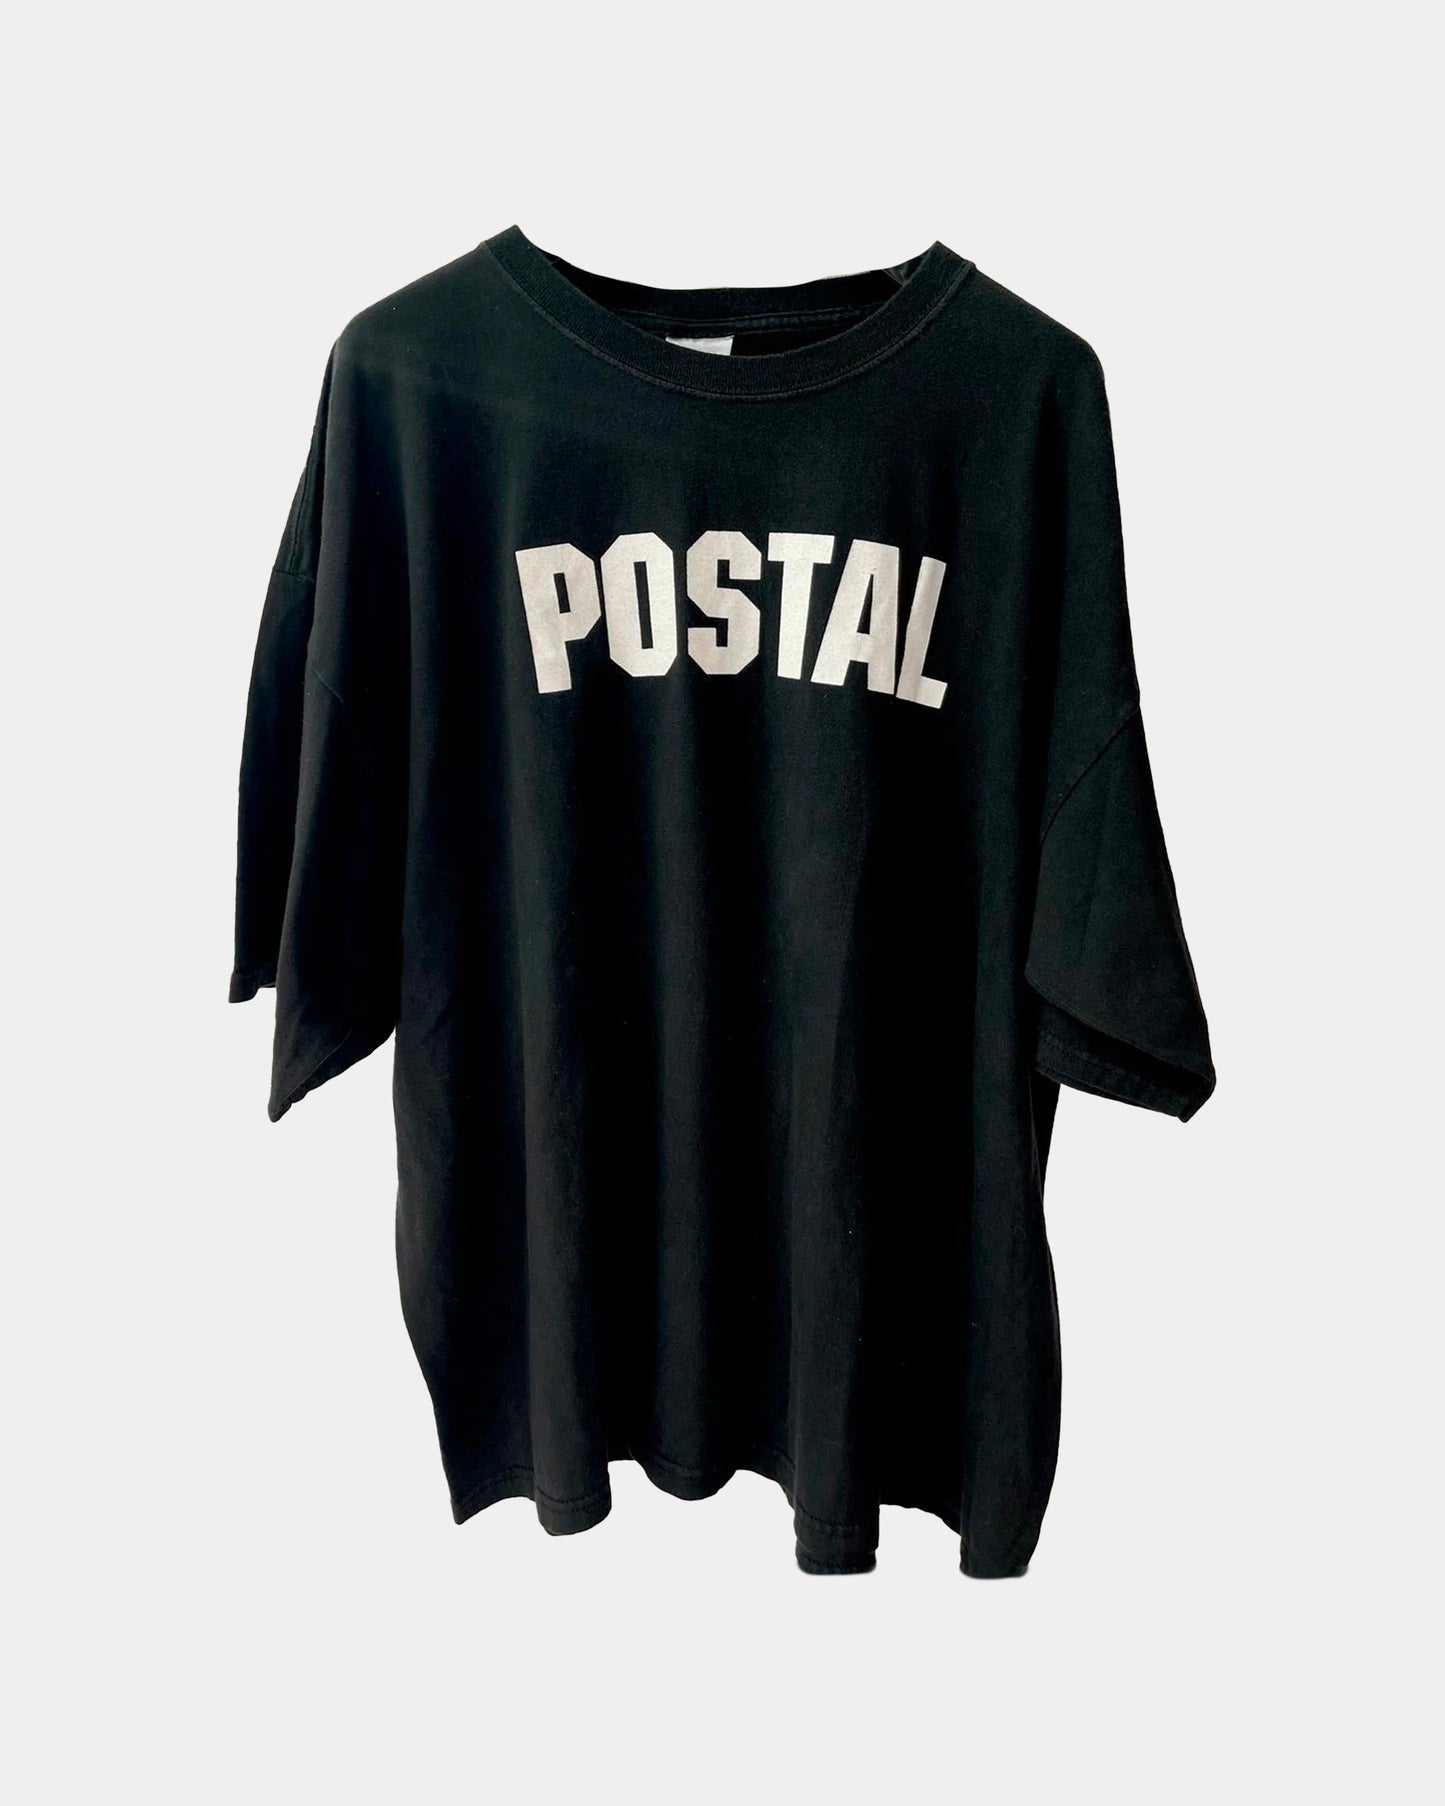 Vintage POSTAL Shirt Baggy Oversized XXL “ GOING POSTAL “